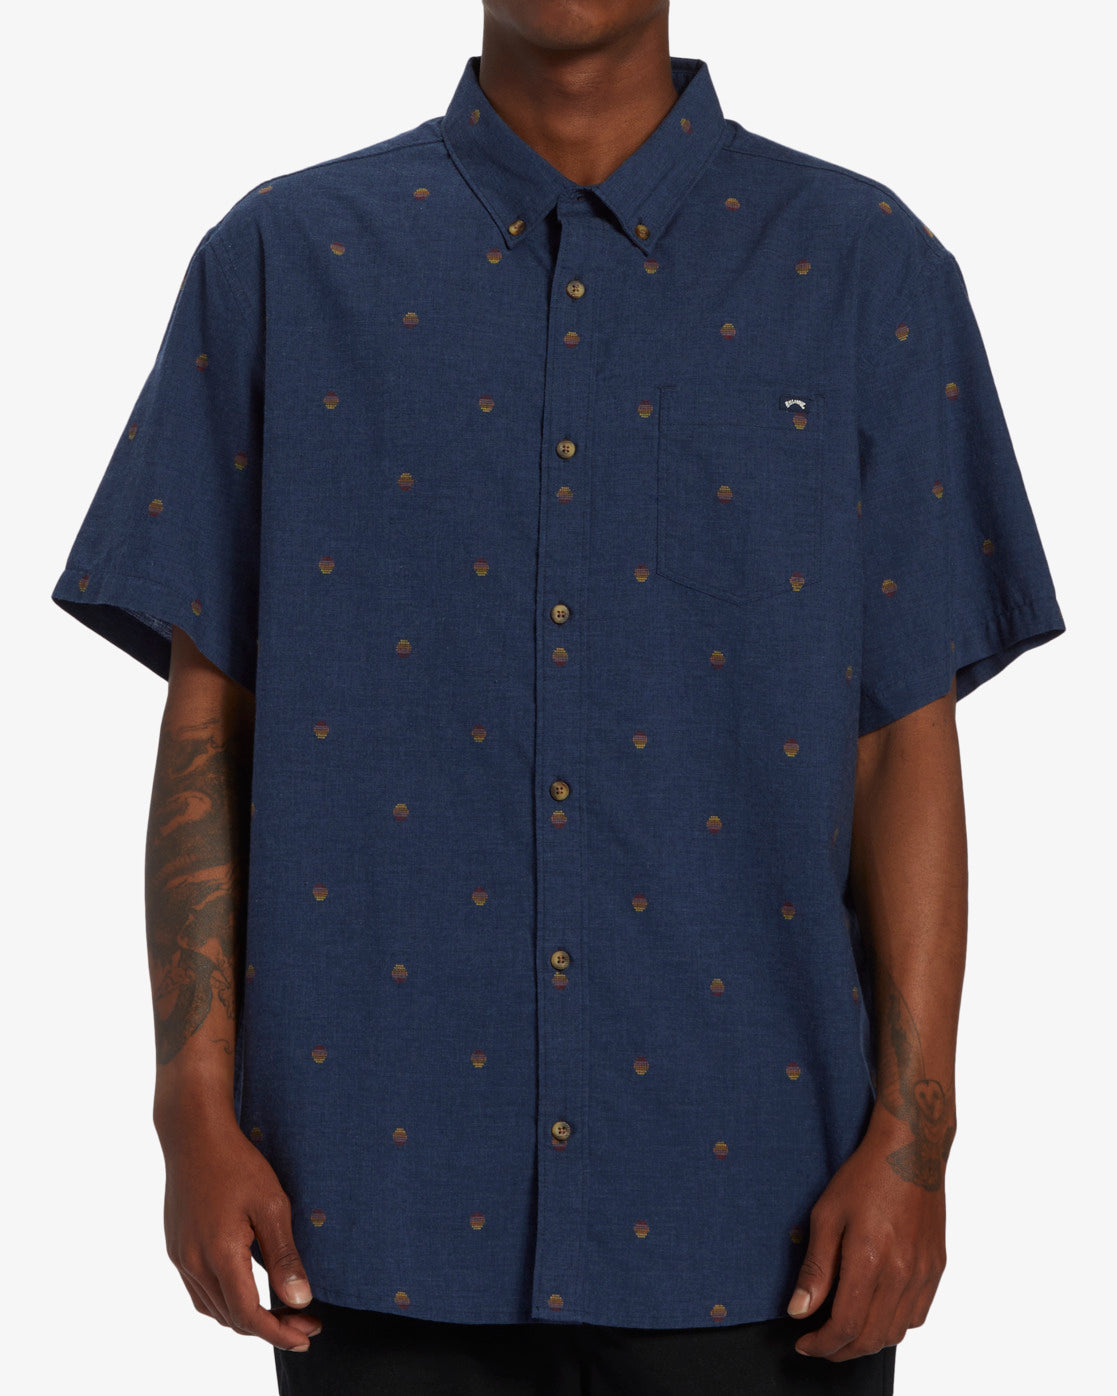 All Day Jacquard Short Sleeve Woven Shirt - Navy